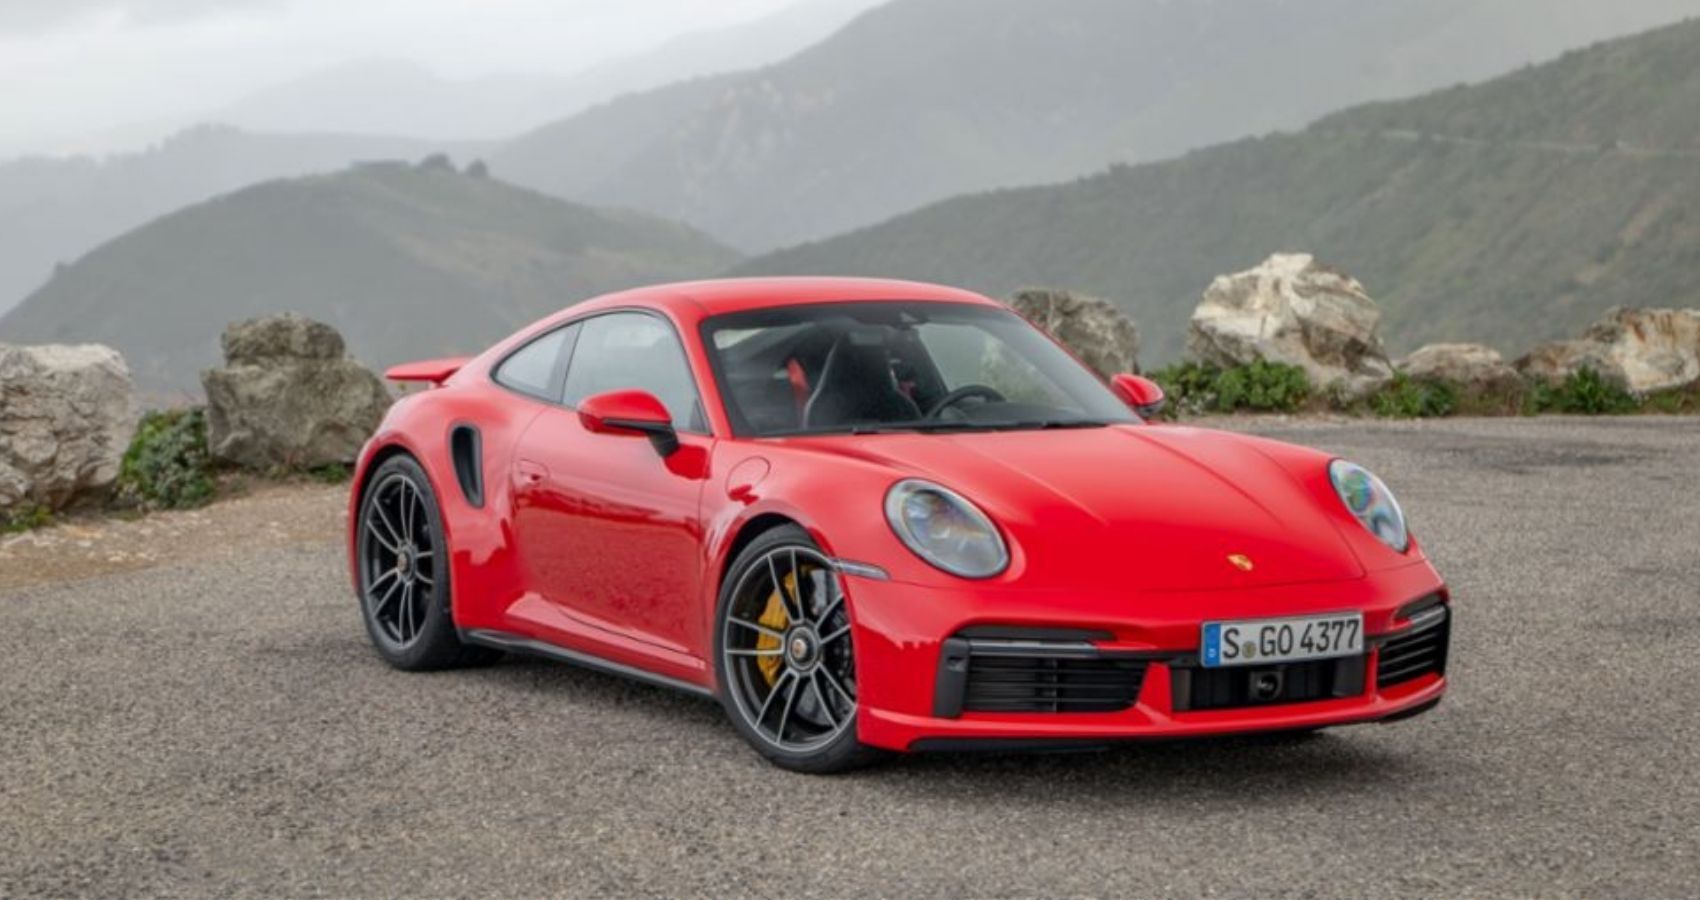 Porsche 911 Front View In Red